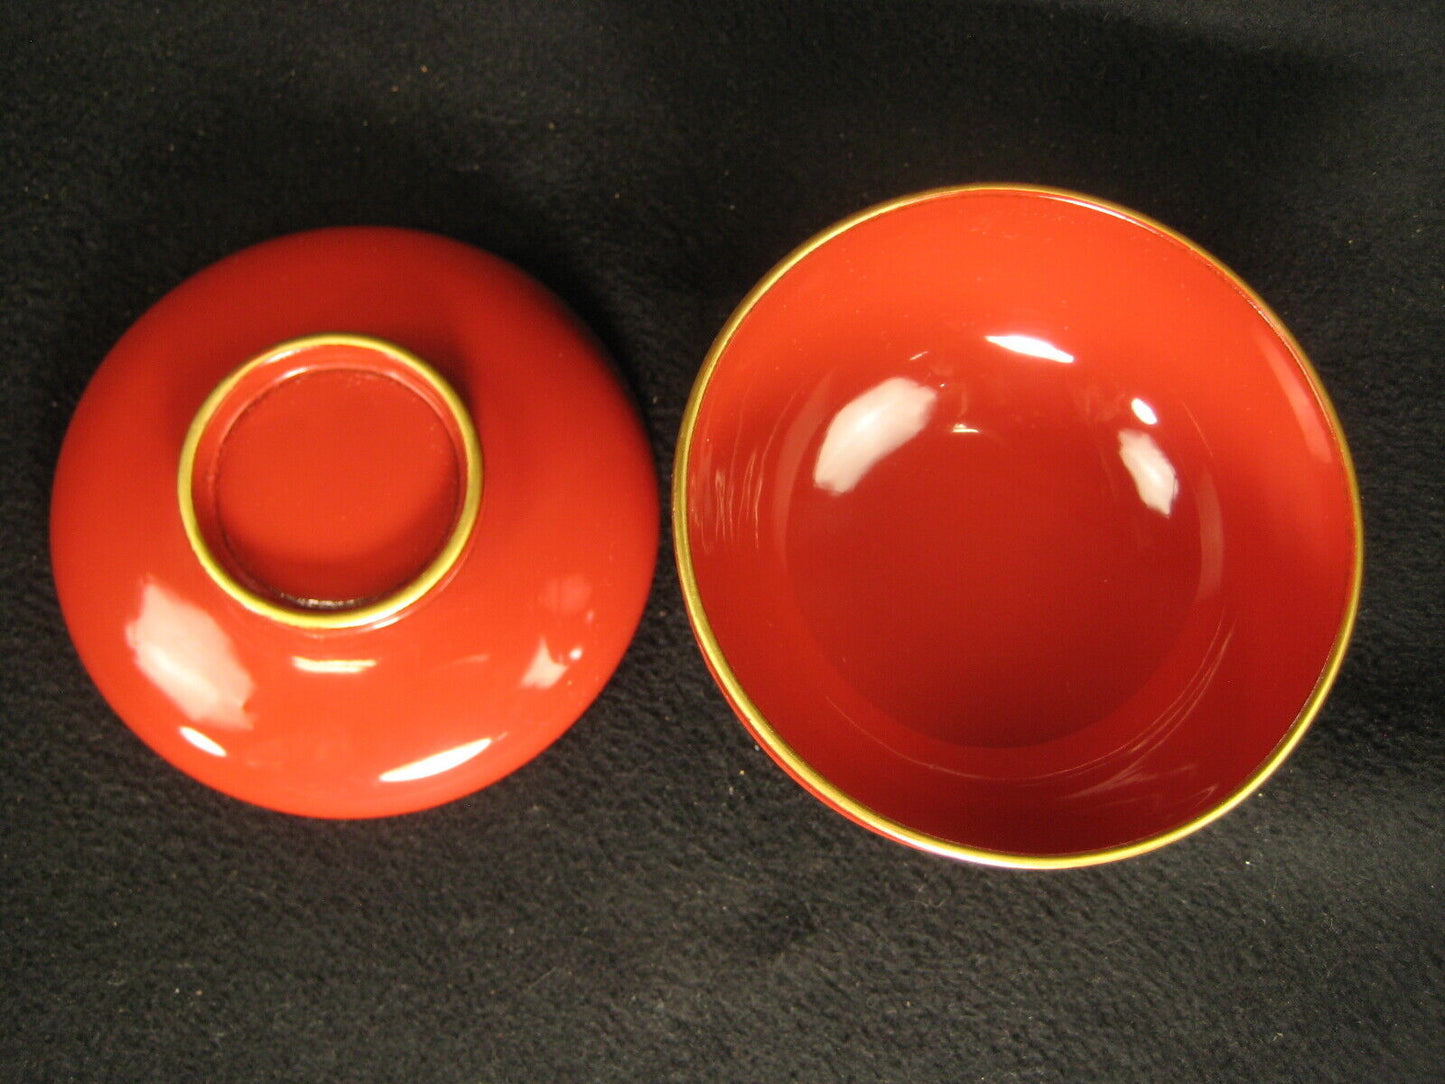 Antique Japanese Meiji Era (C.1880) Lacquer Wooden Lidded Soup / Rice Bowl